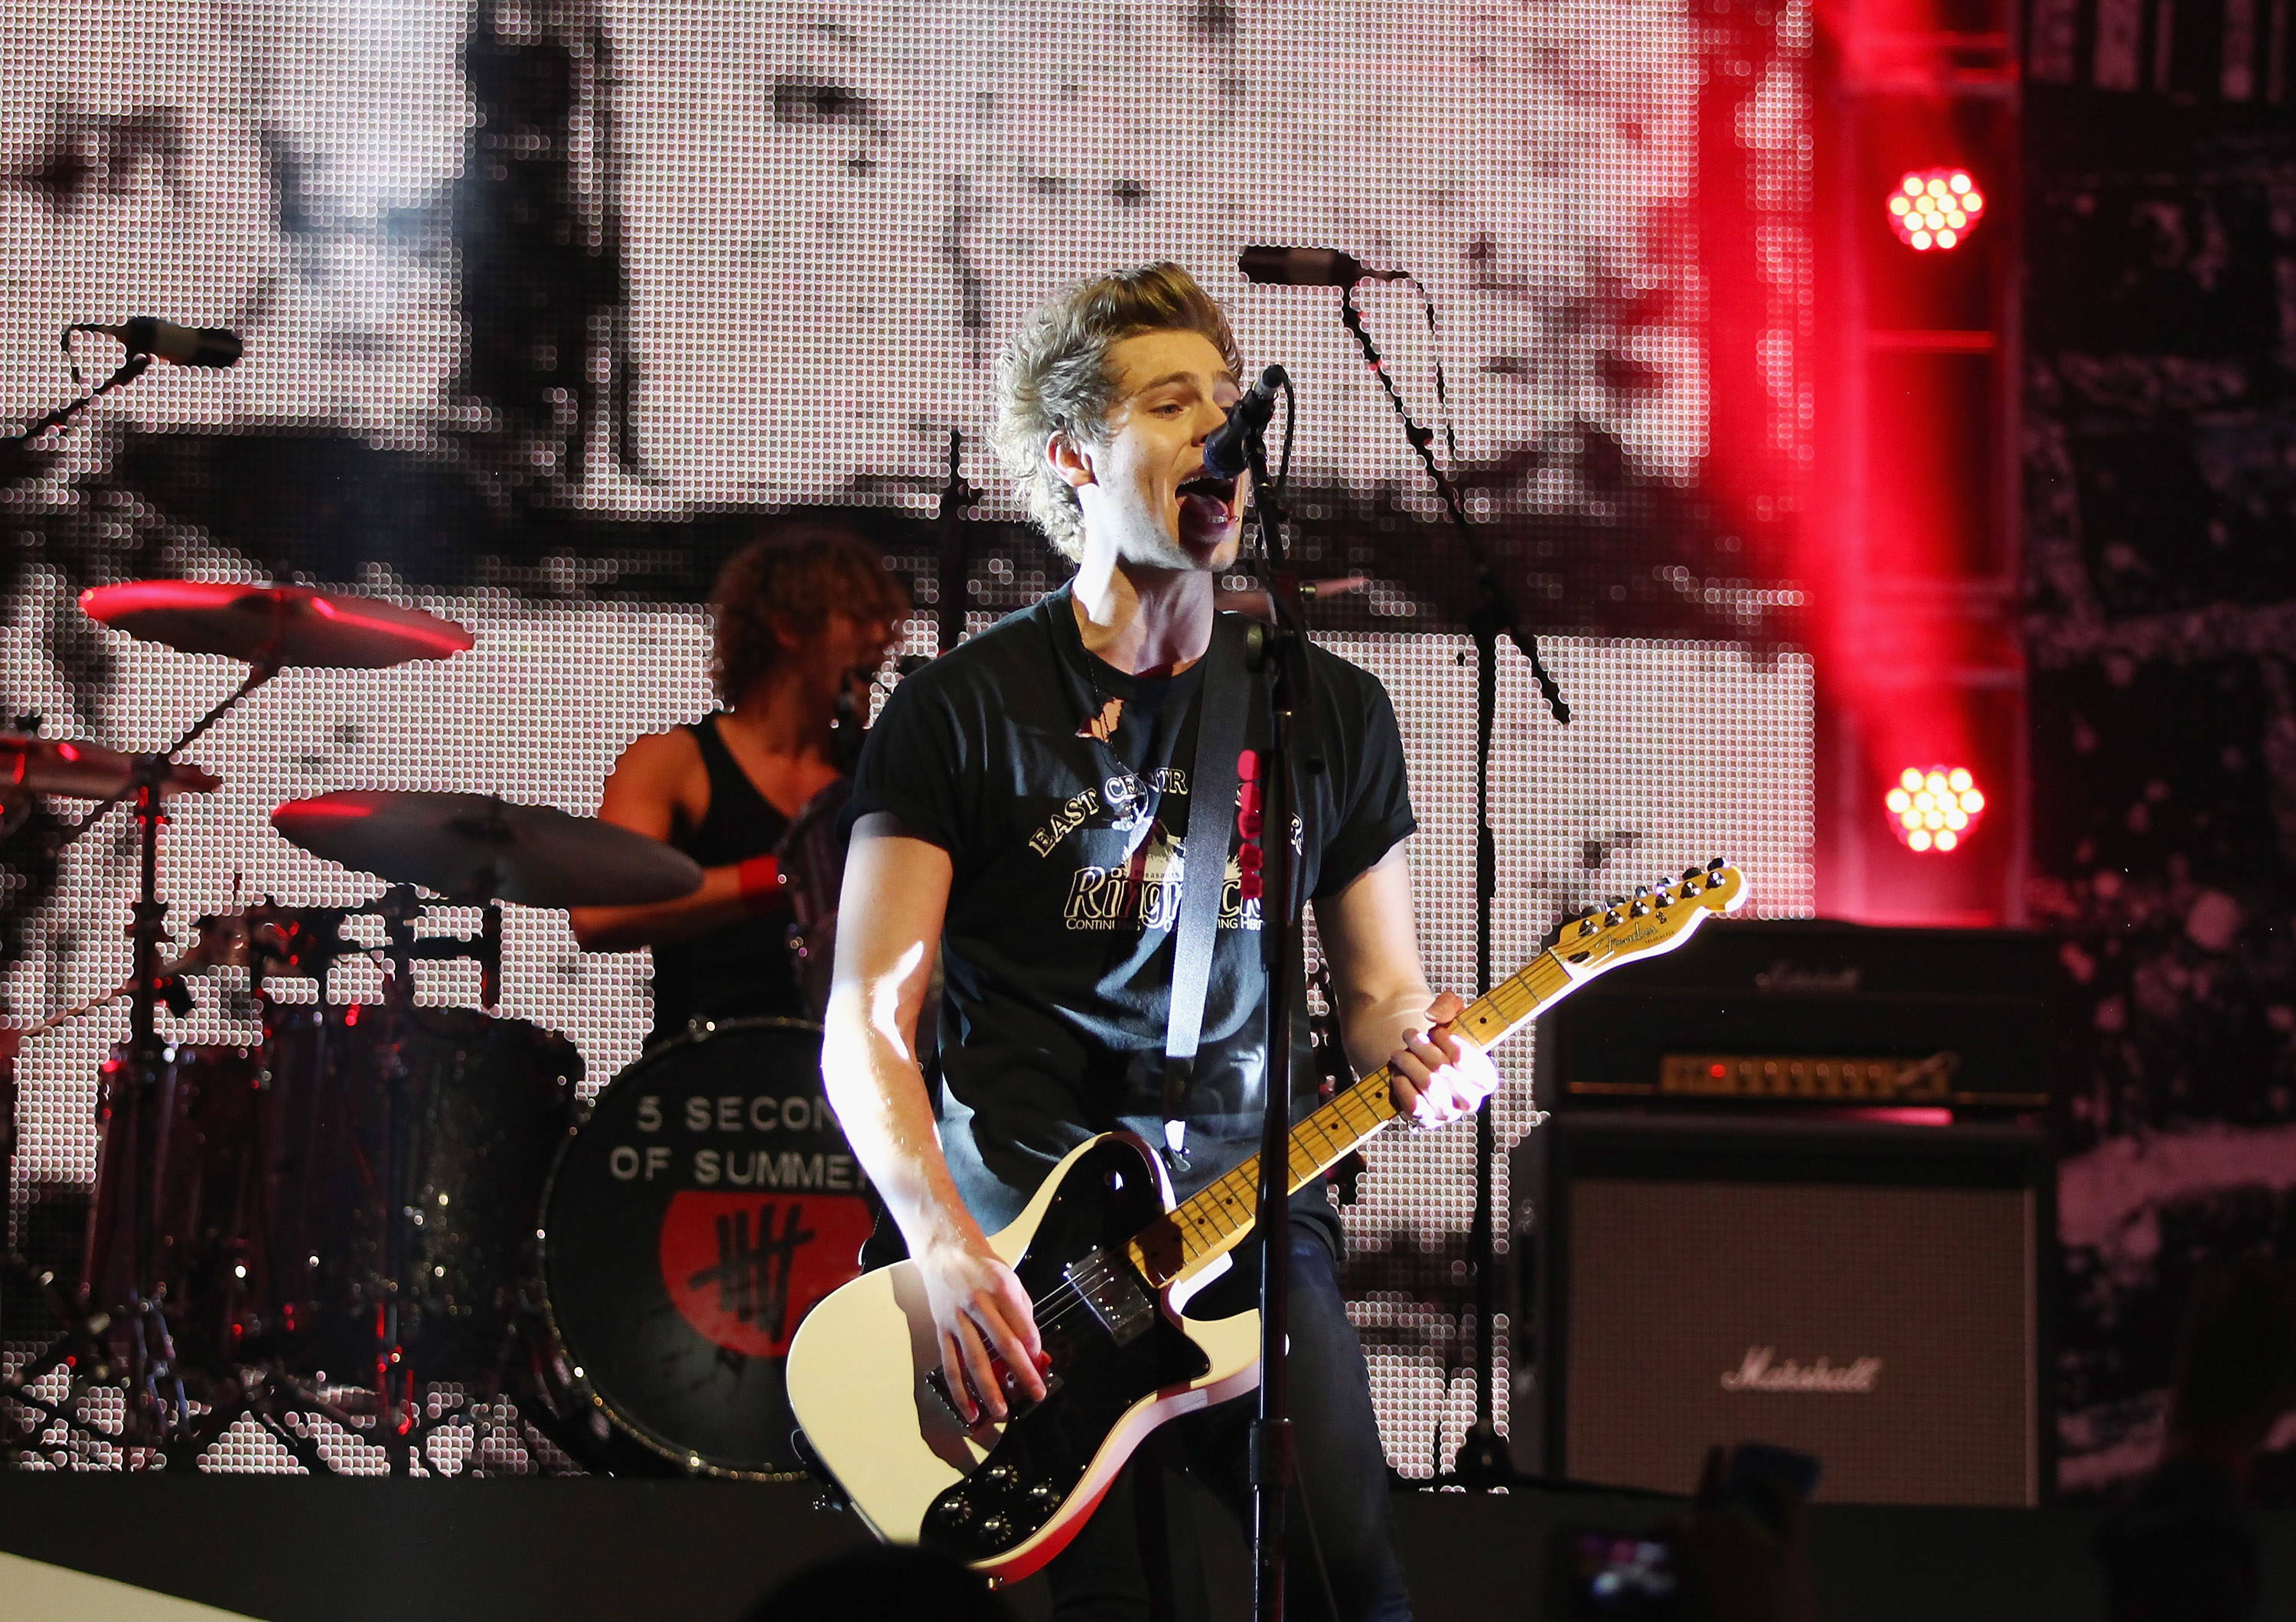 Luke playing guitar and singing onstage